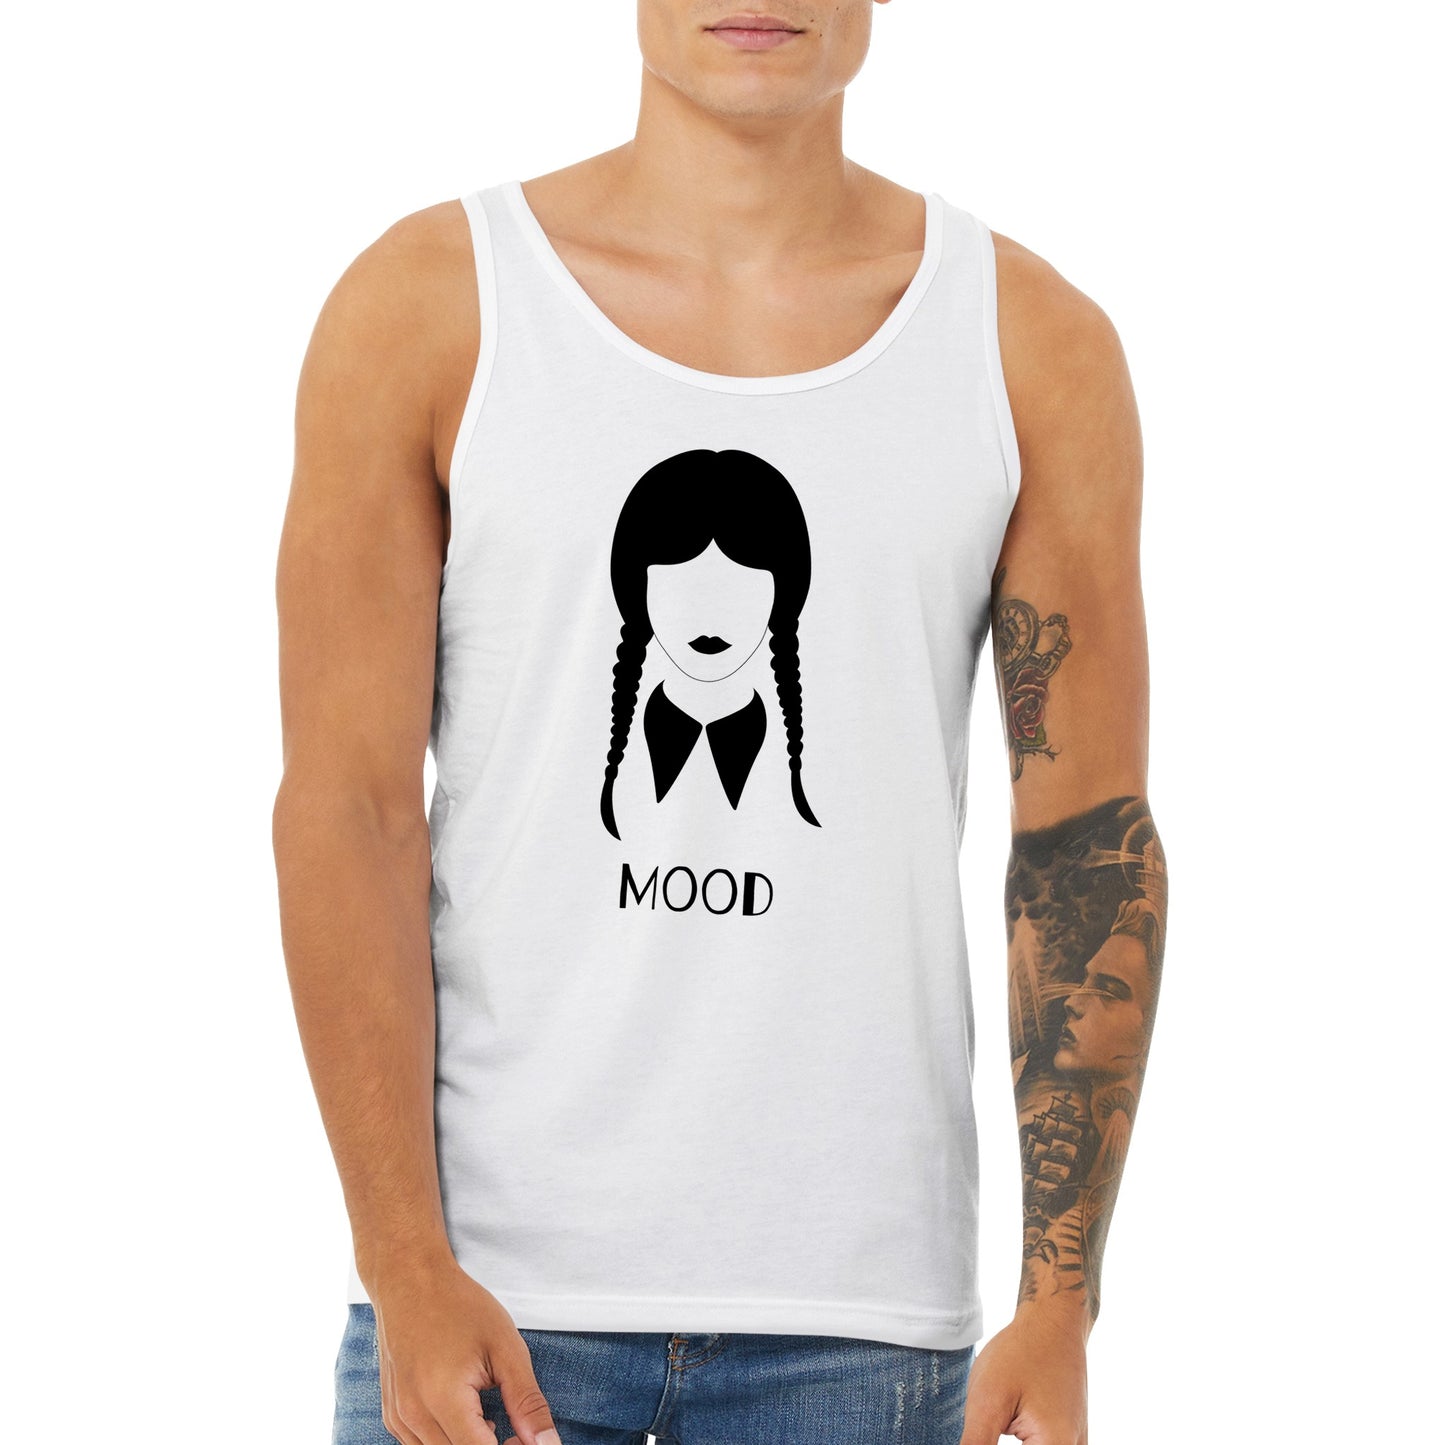 mood (wednesday) -mens clothing